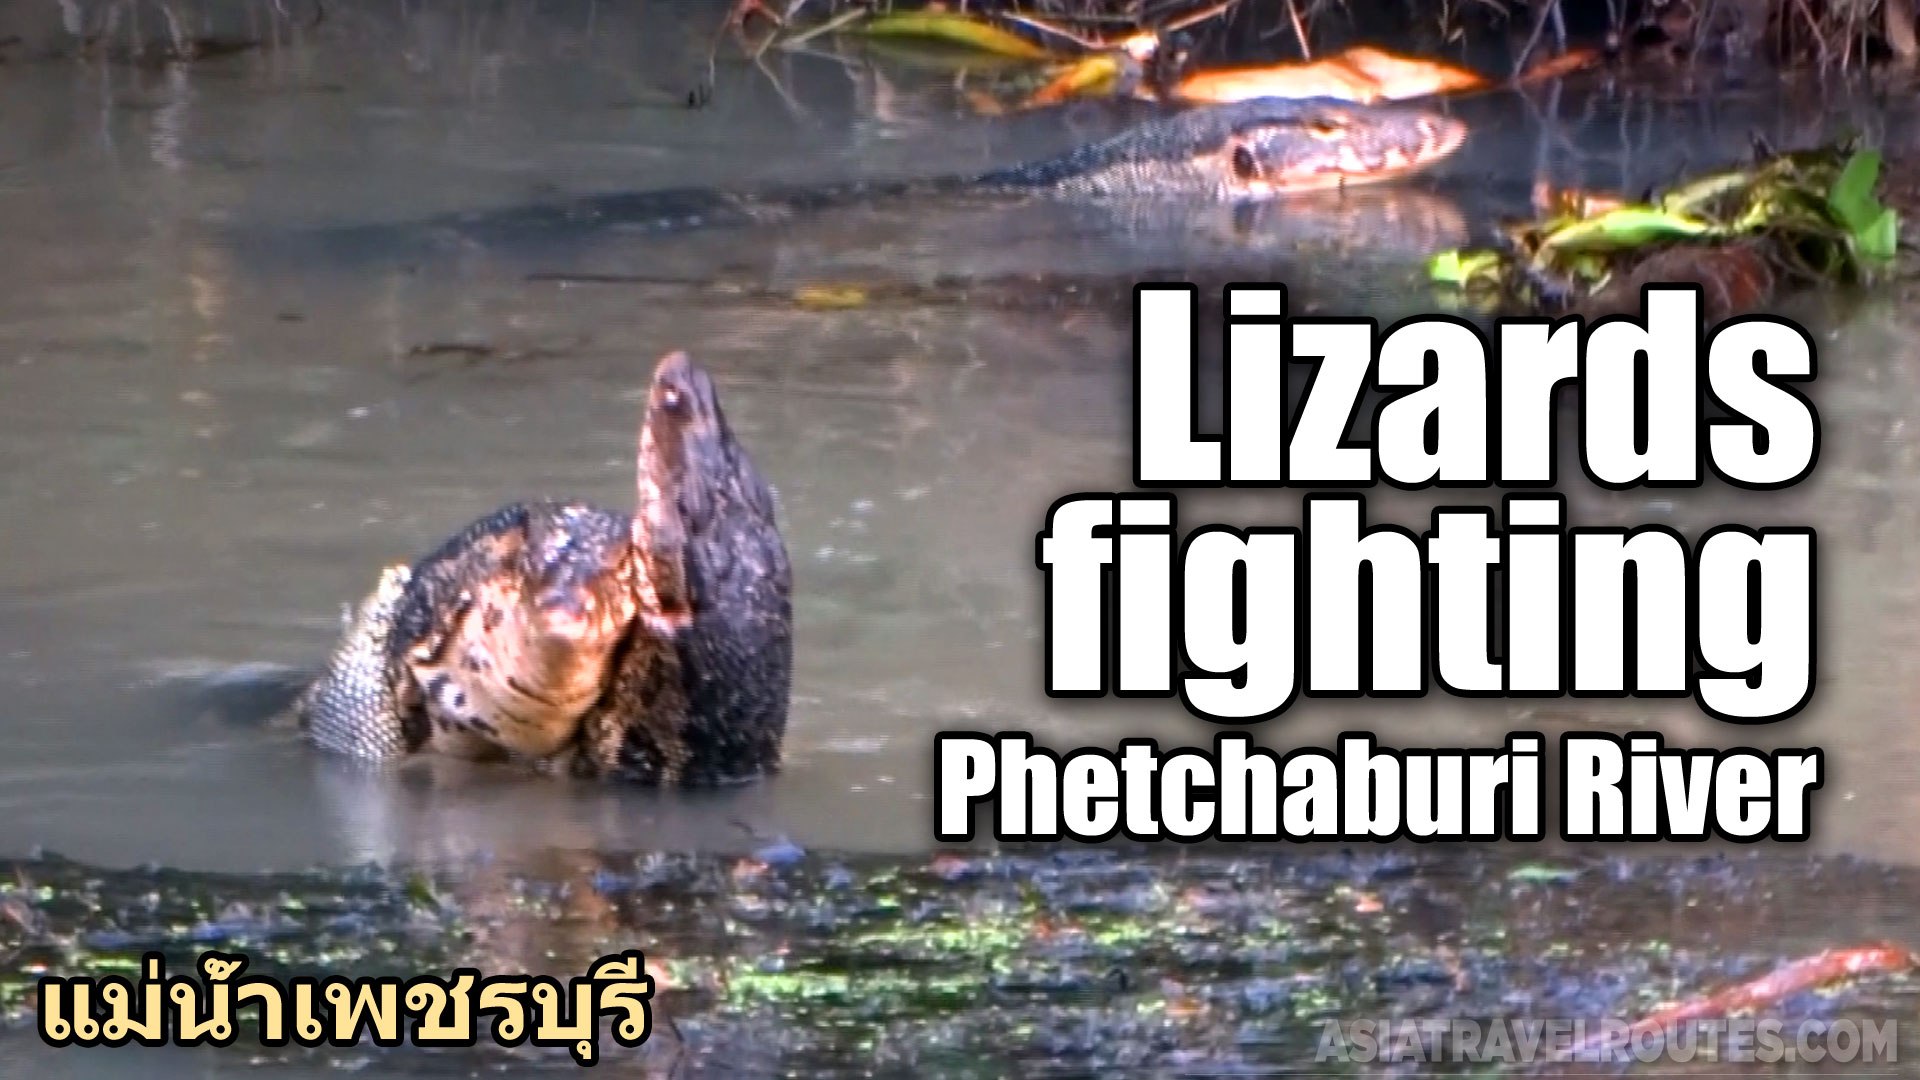 Lizards Fighting, Phetchaburi River